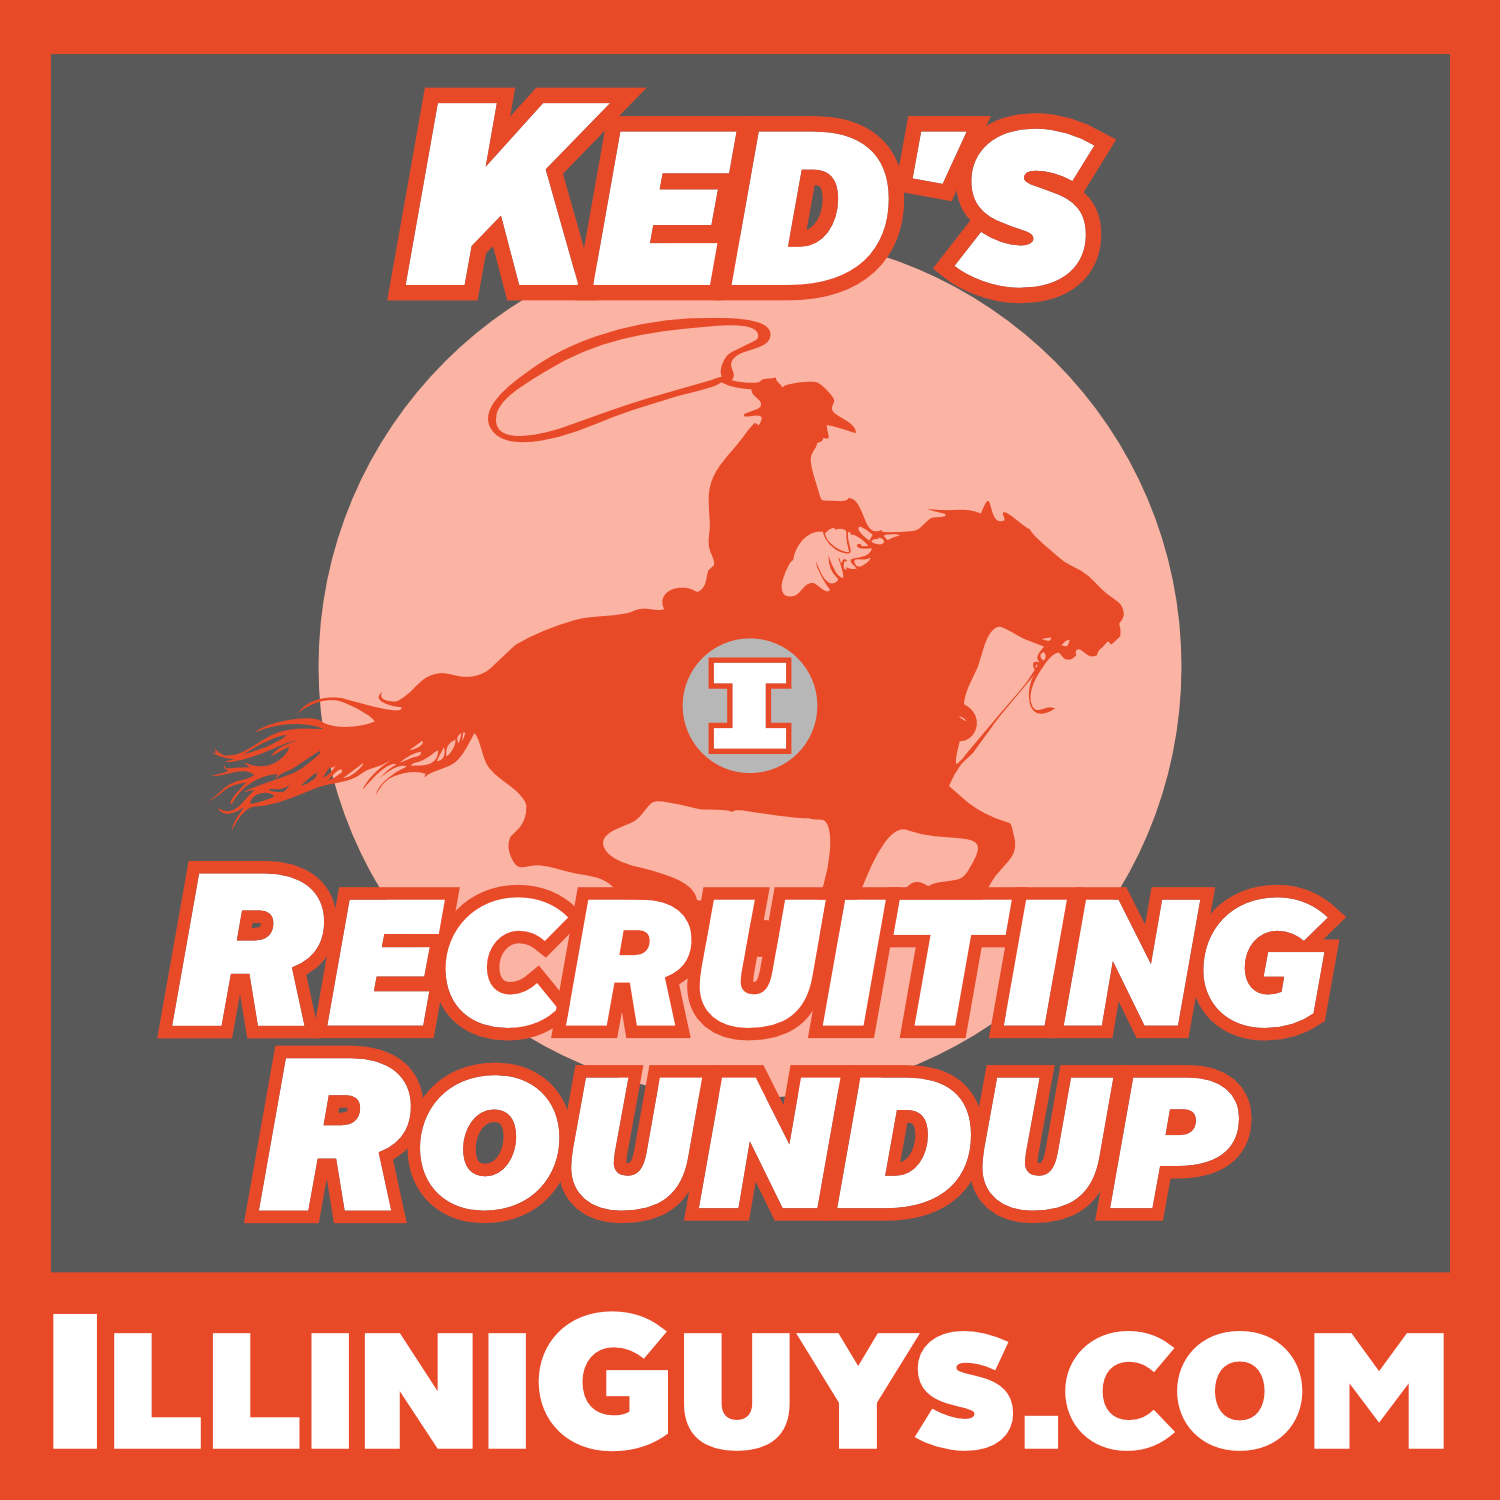 Ked's Recruiting Roundup - Ben Gibbs, Father of Dravyn Gibbs-Lawhorn